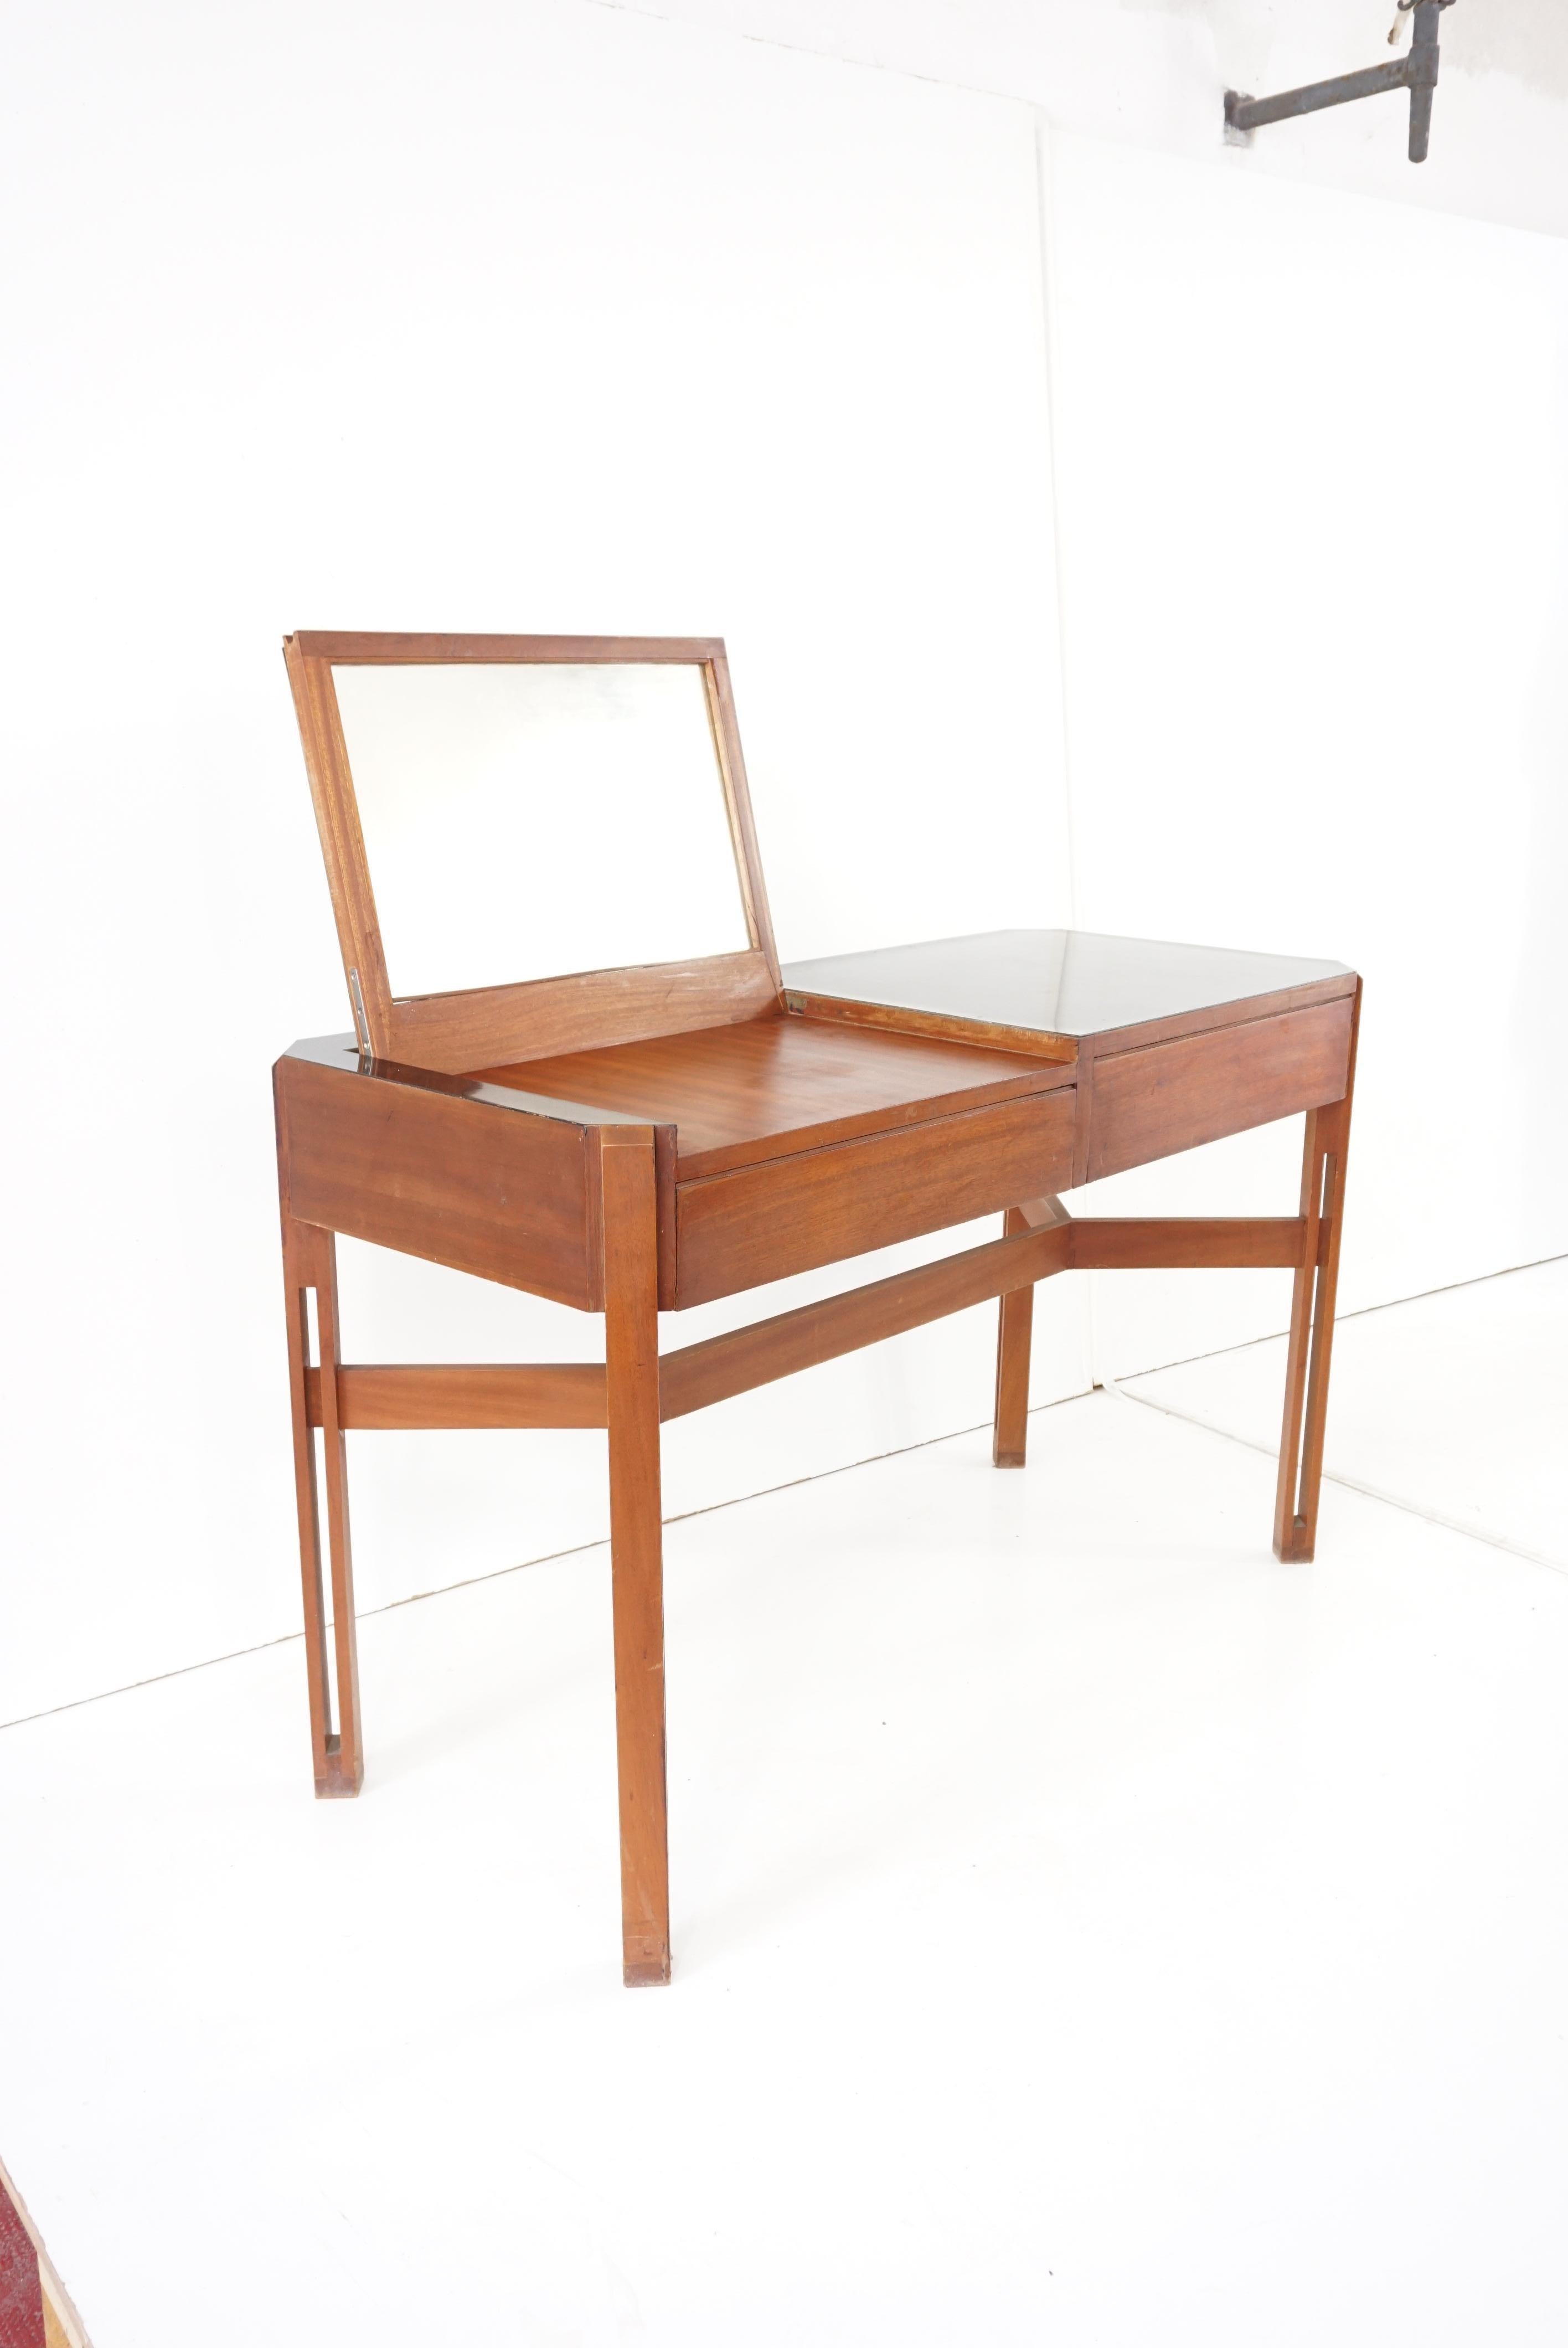 Italian Ico Parisi Rare Large Wood and Laminate Desk with Mirror, Hotel Lorena, 1959.60 For Sale